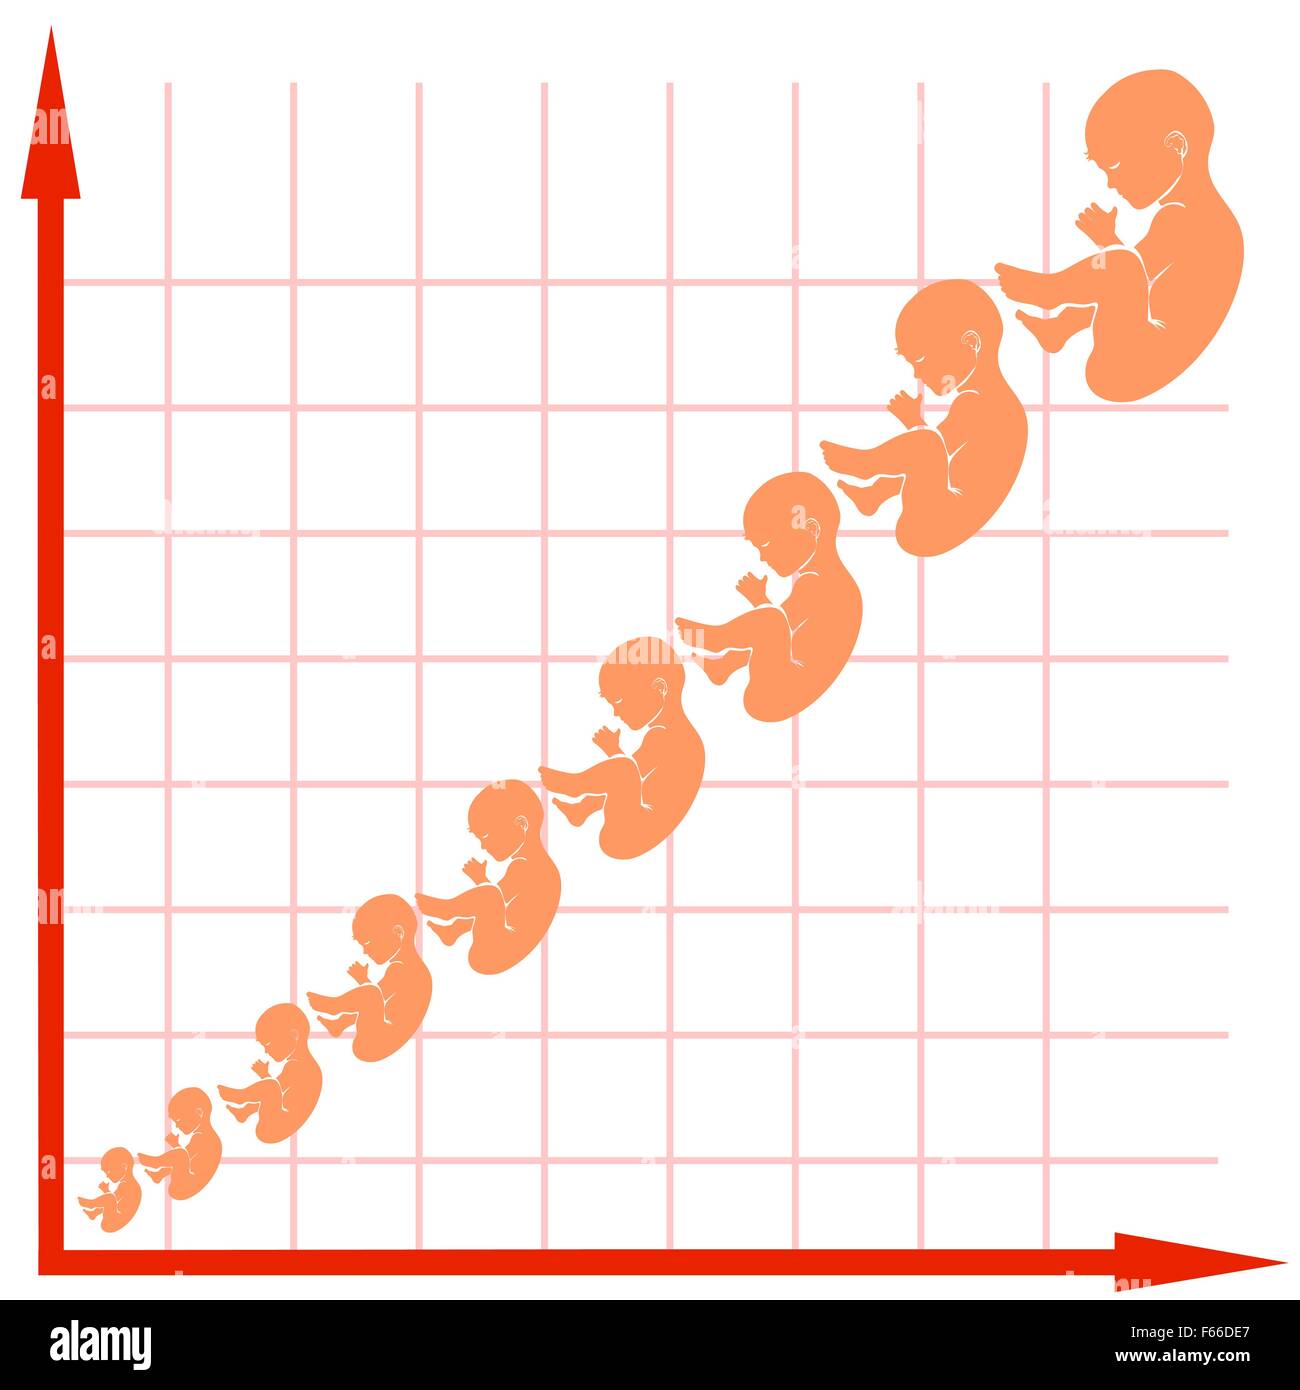 Pregnancy Growth Week By Week Chart